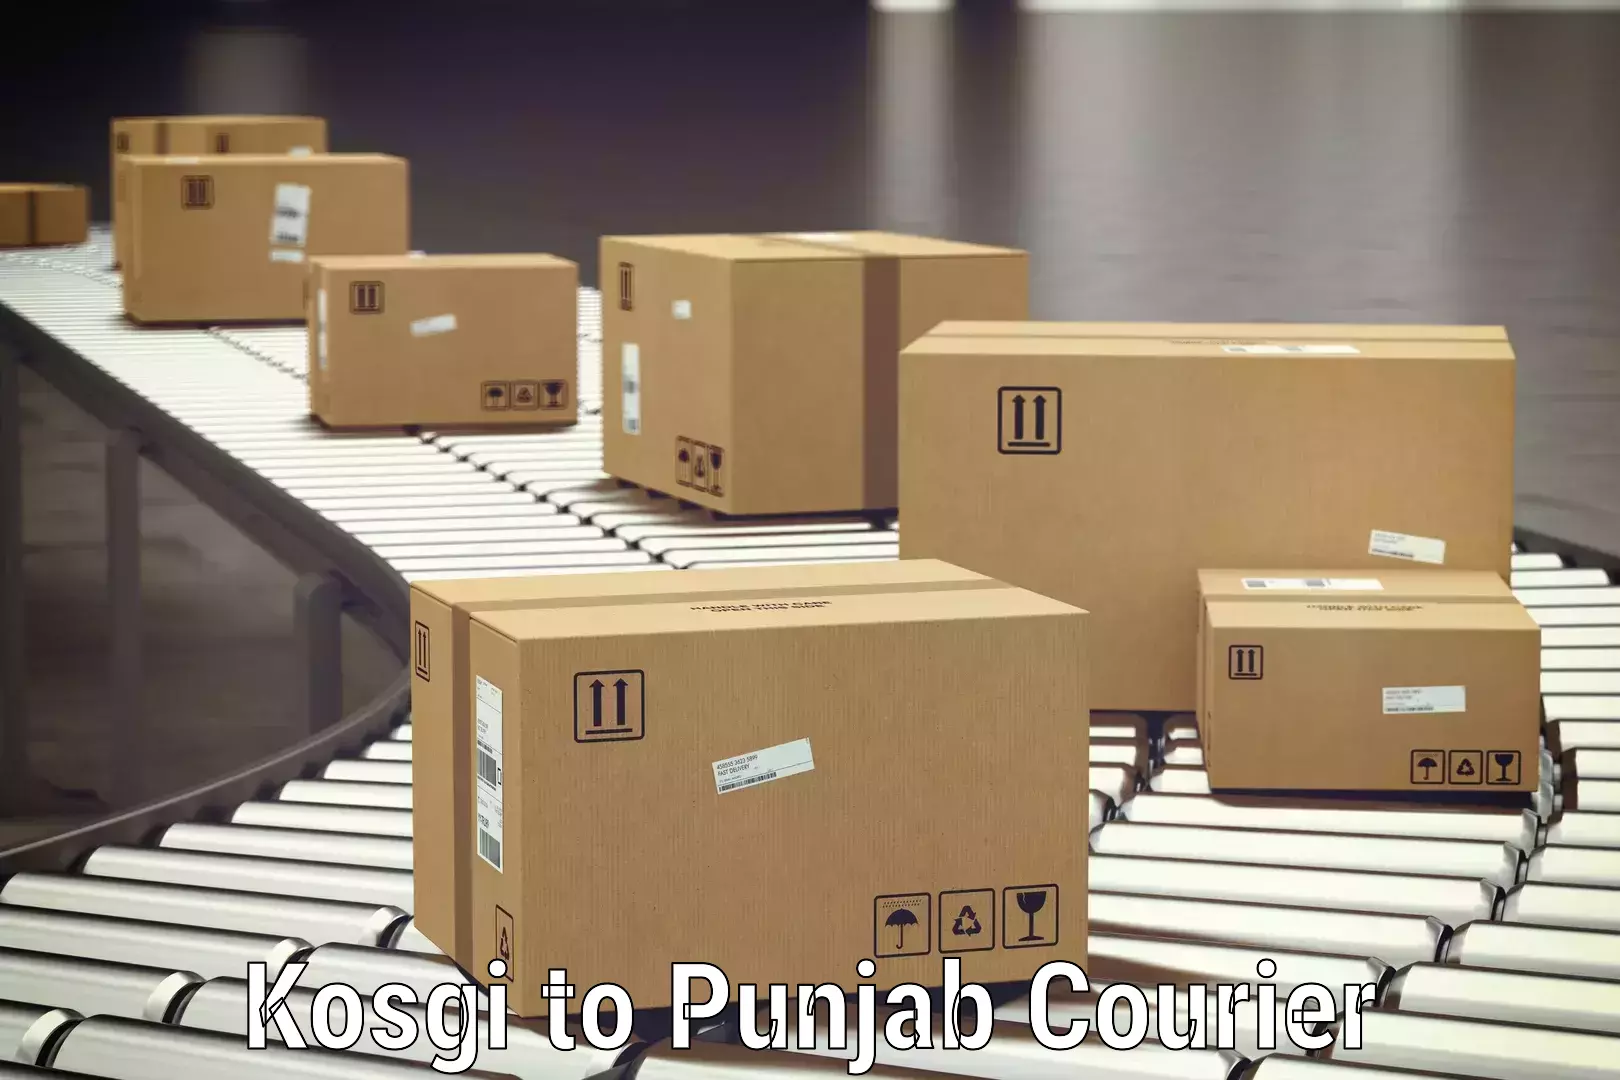 Multi-destination luggage transport Kosgi to Punjab Agricultural University Ludhiana